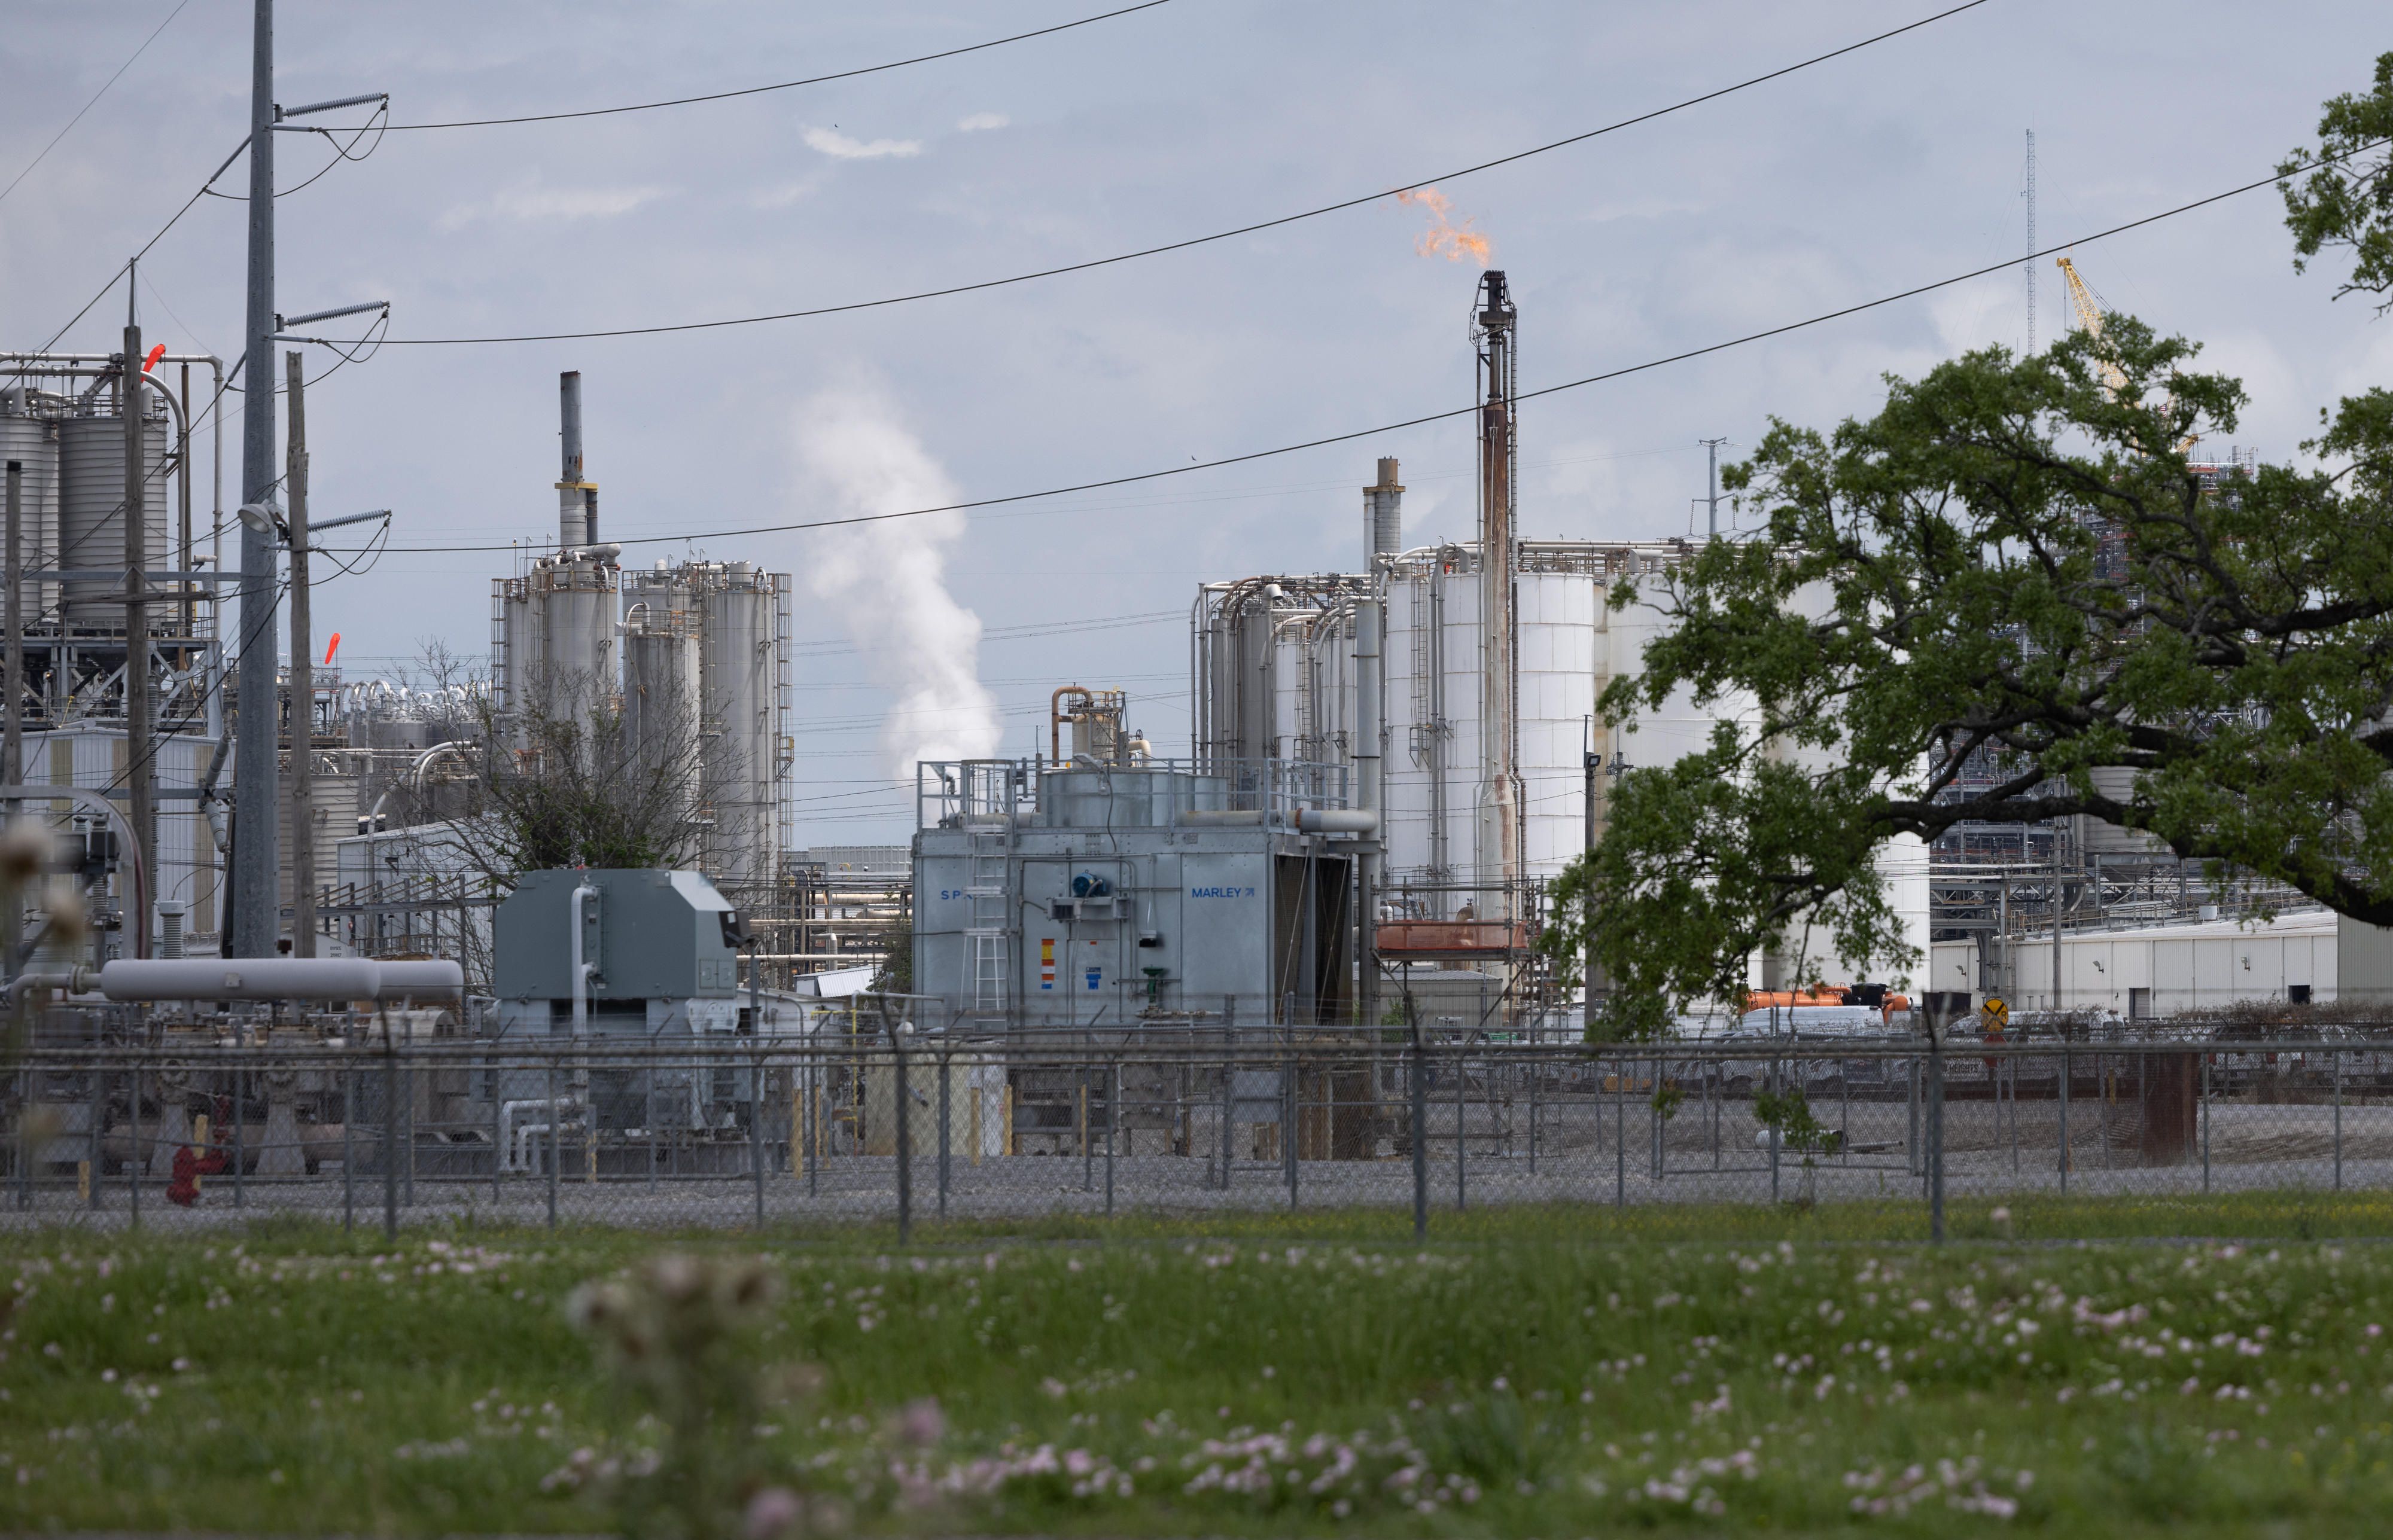 Dow's Plaquemine Chemical Plant is Louisiana's 'Cancer Alley' - Photographer Julie Dermansky